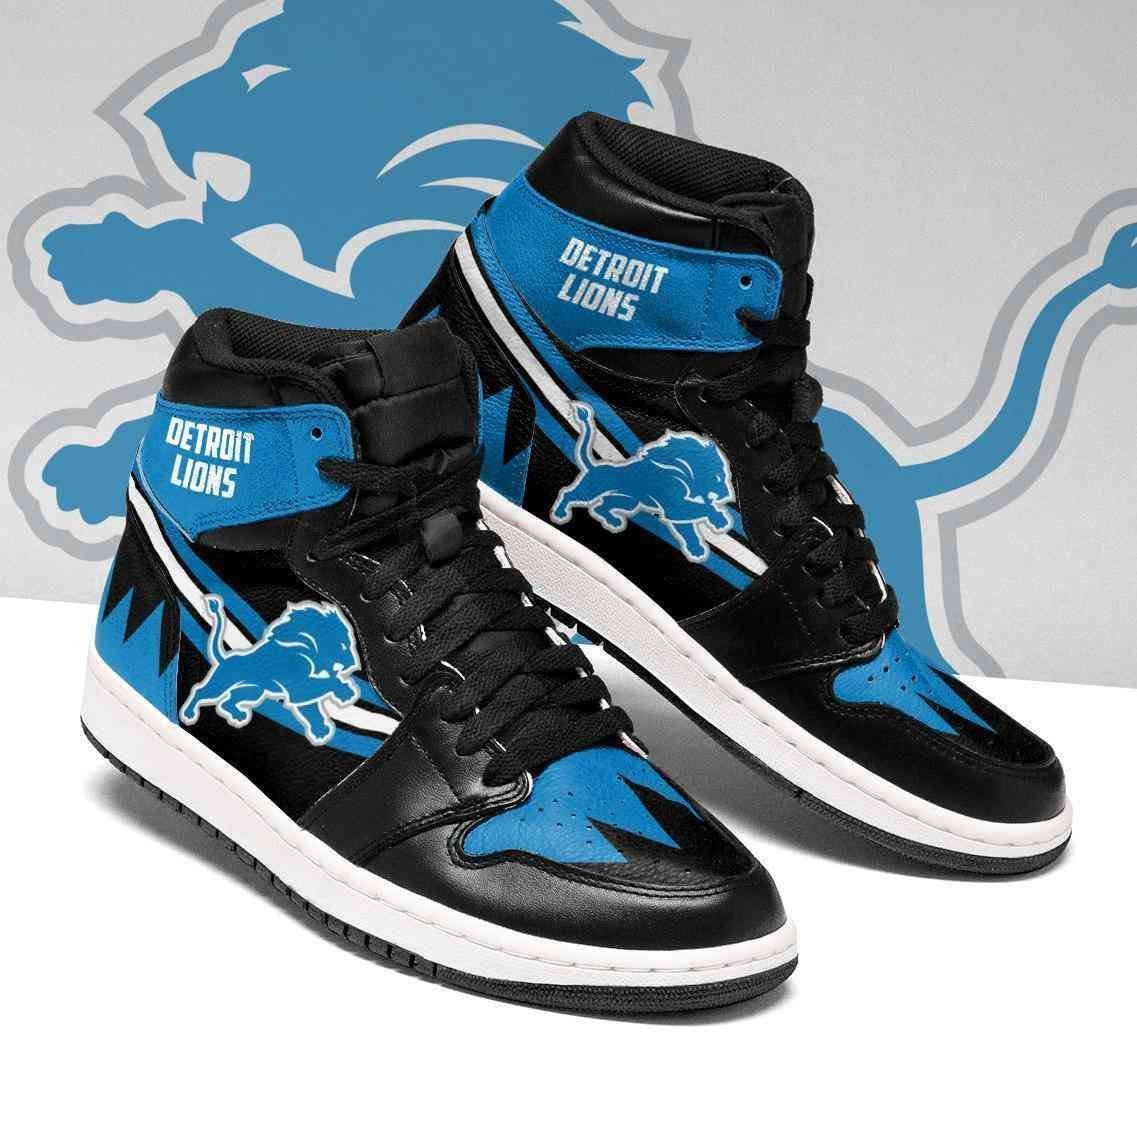 Detroit Lions Nfl Football 3 Air Jordan Shoes Sport Sneakers